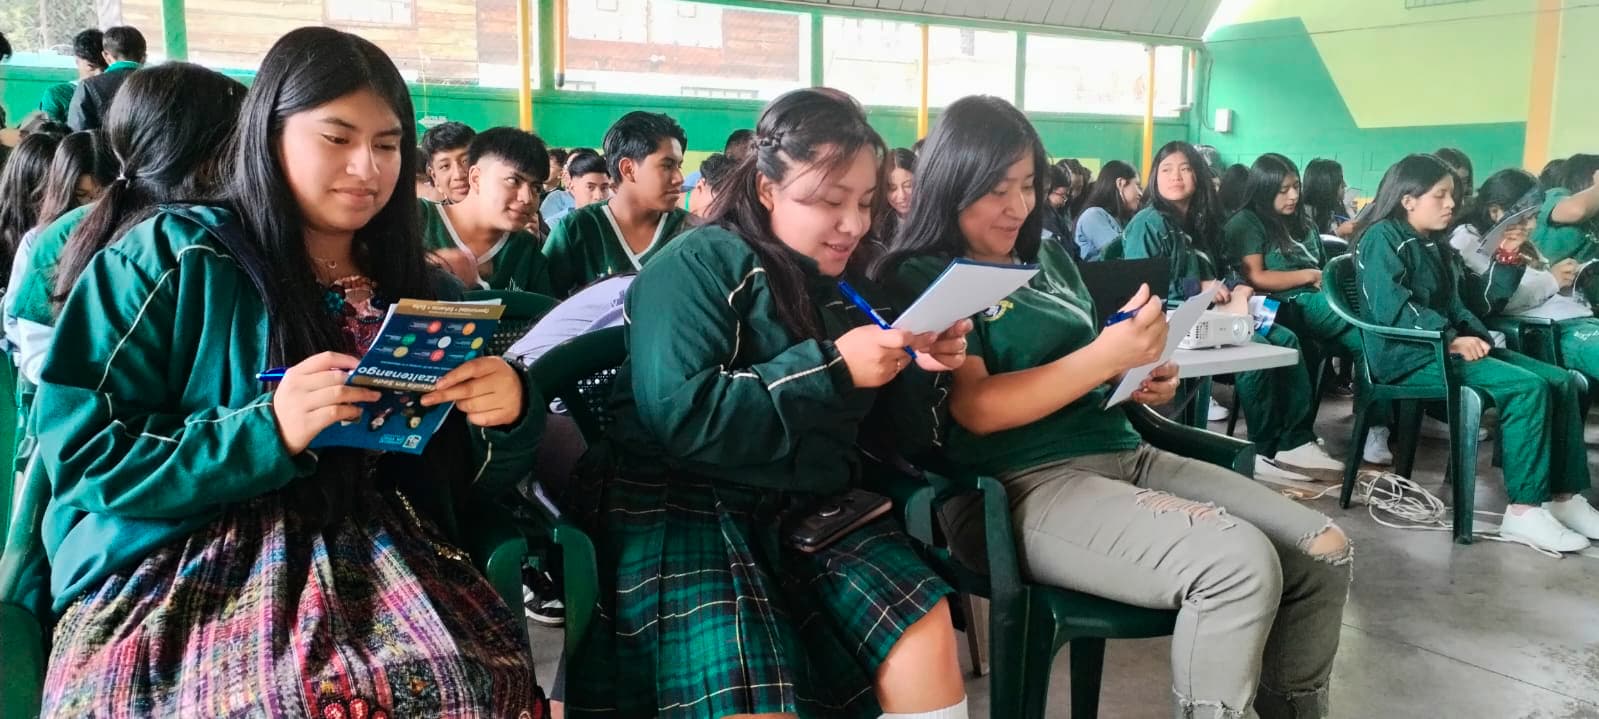 Estudiantes Graduandos del Colegio Alfa y Omega de San Juan Ostuncalco | Universidad da Vinci de Guatemala